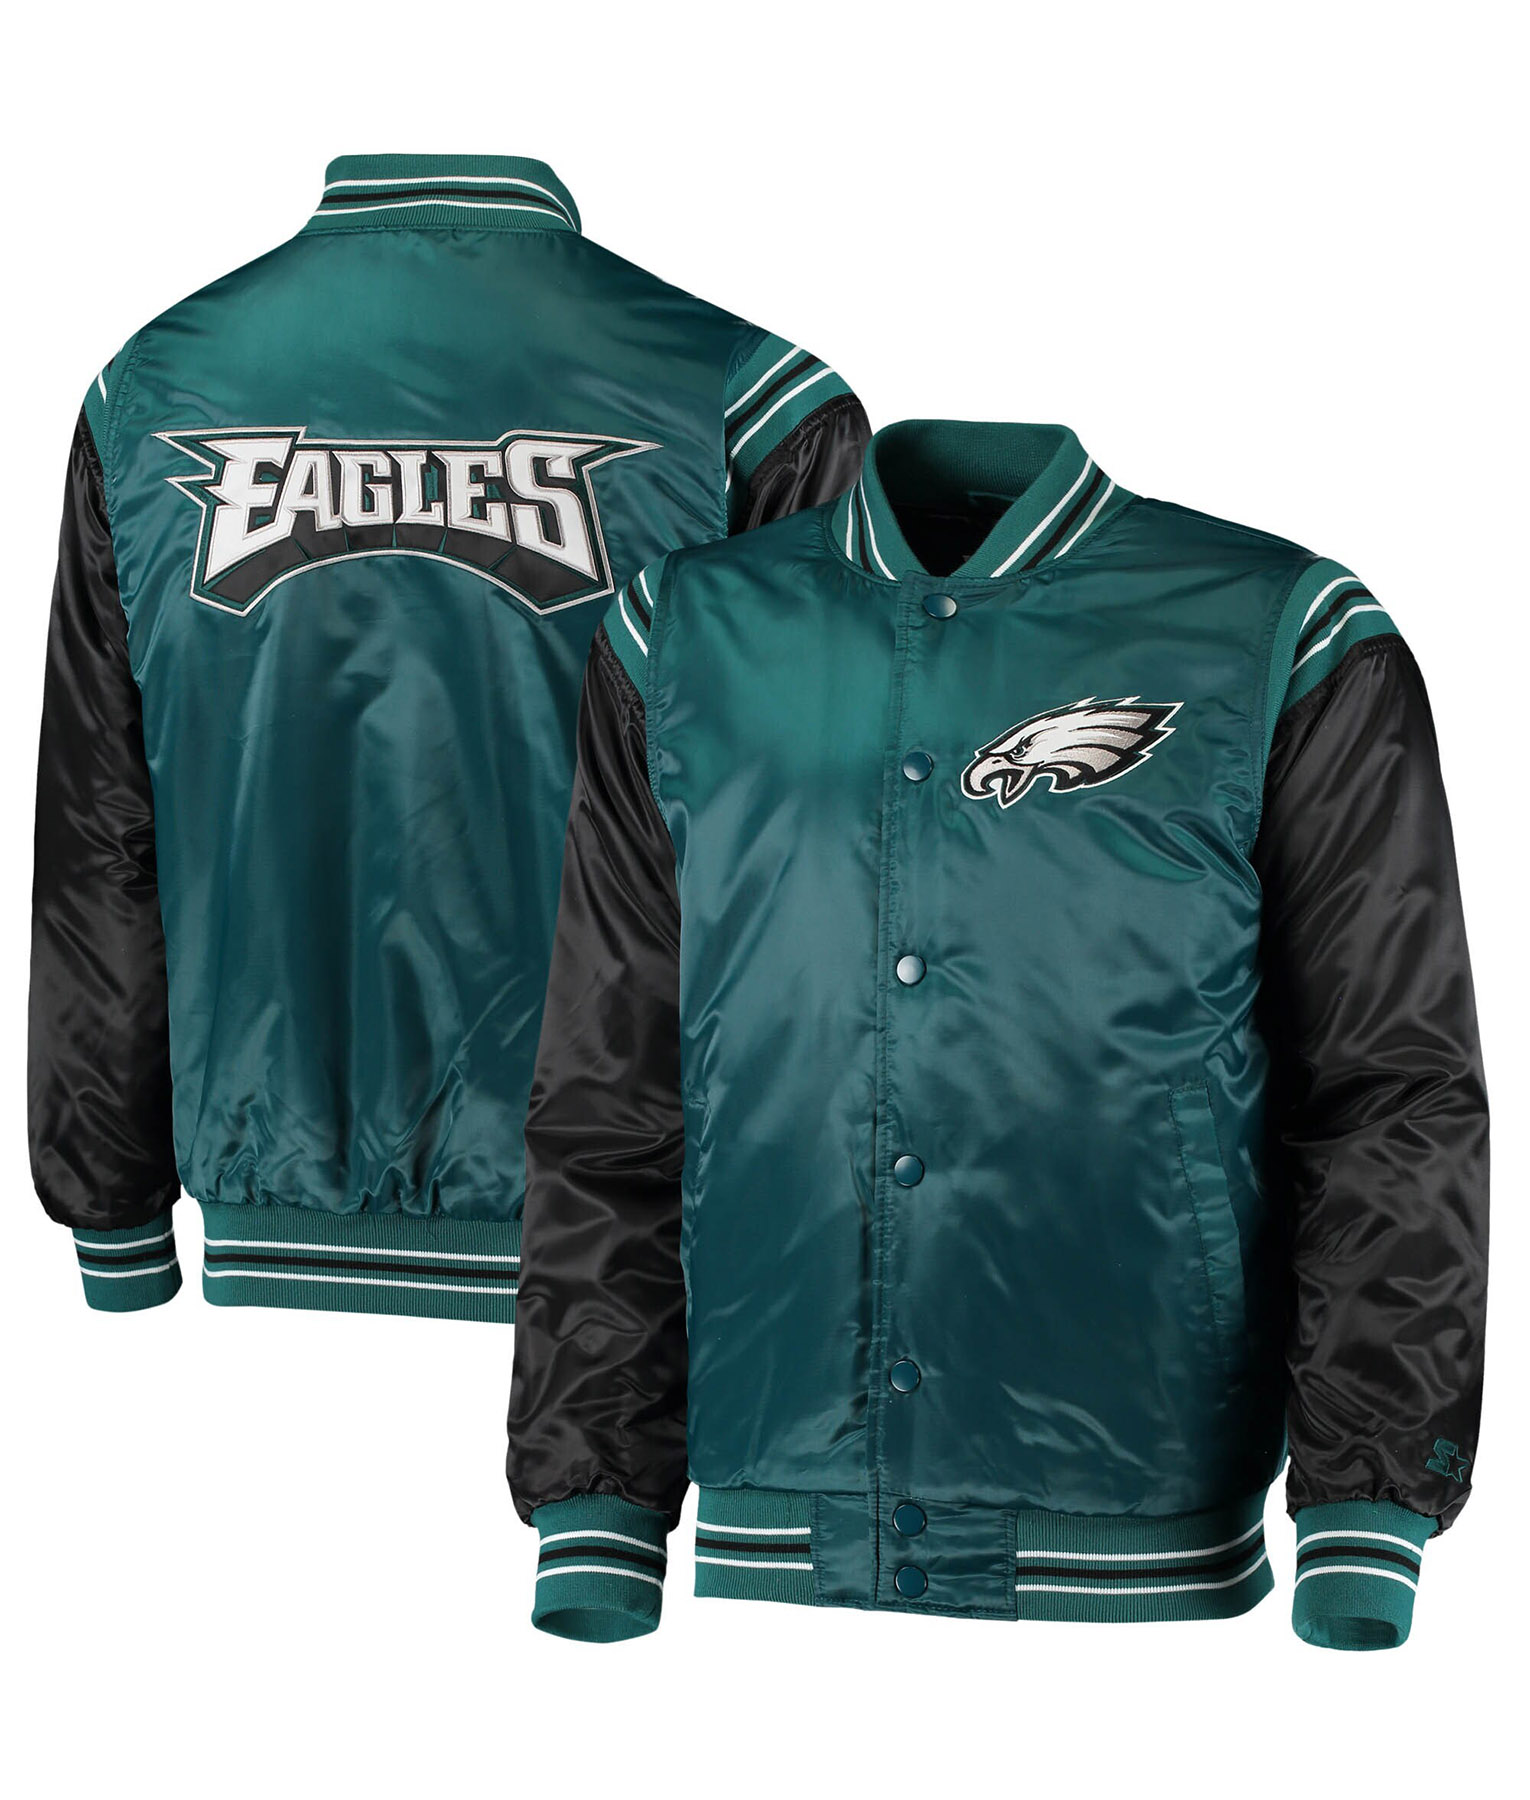 P Eagles Green Varsity Jacket (3)